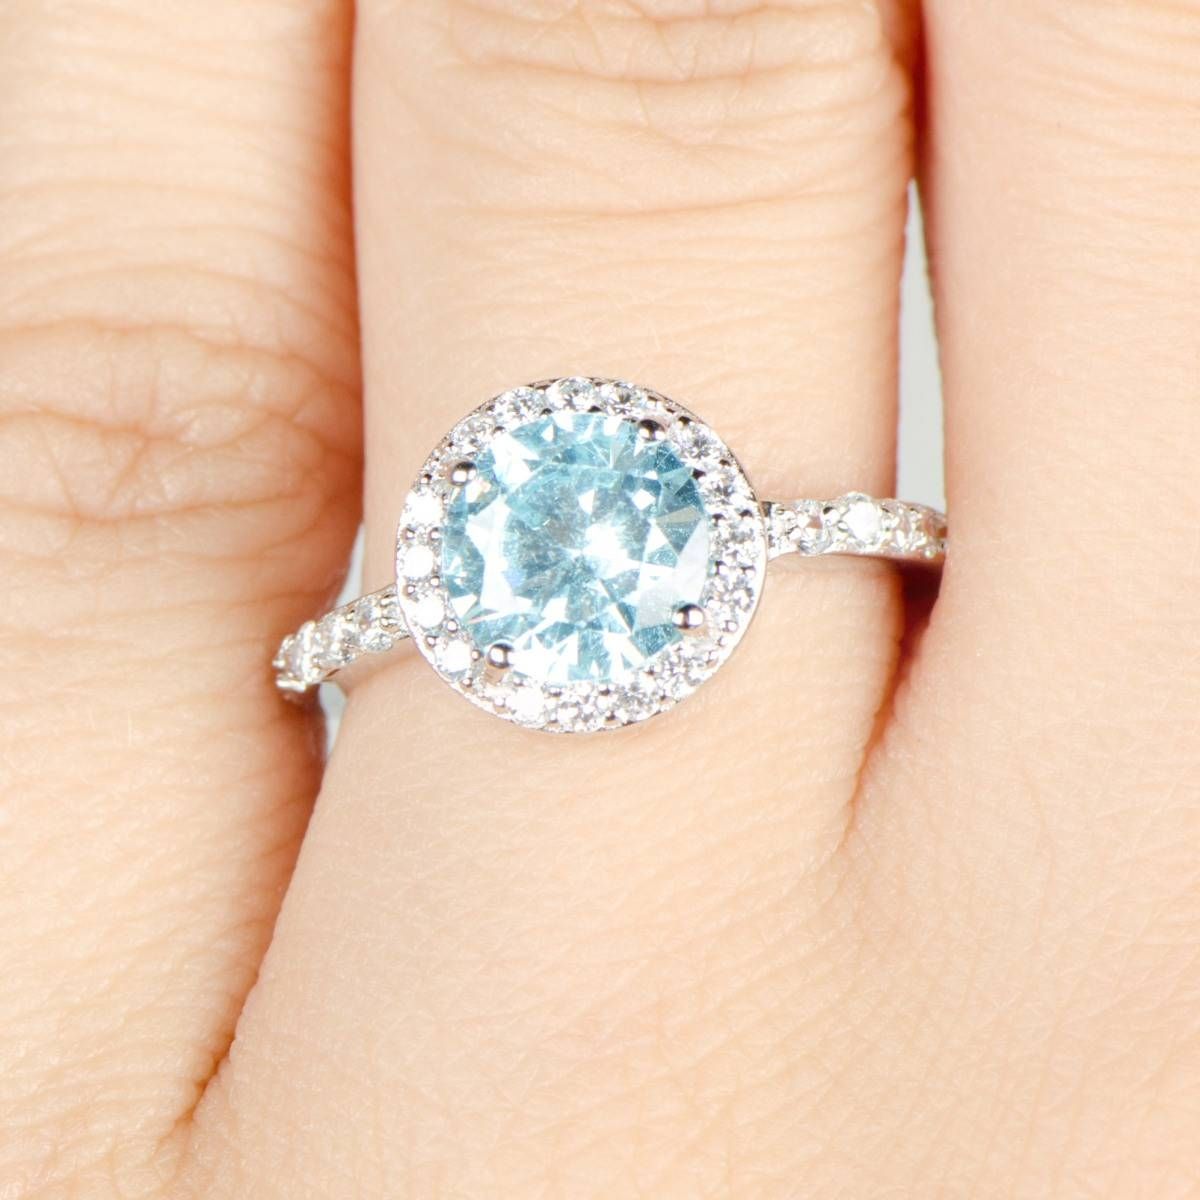 December Blue Cz Imitation Birthstone Ring For Engagement Rings With December Birthstone (View 14 of 15)